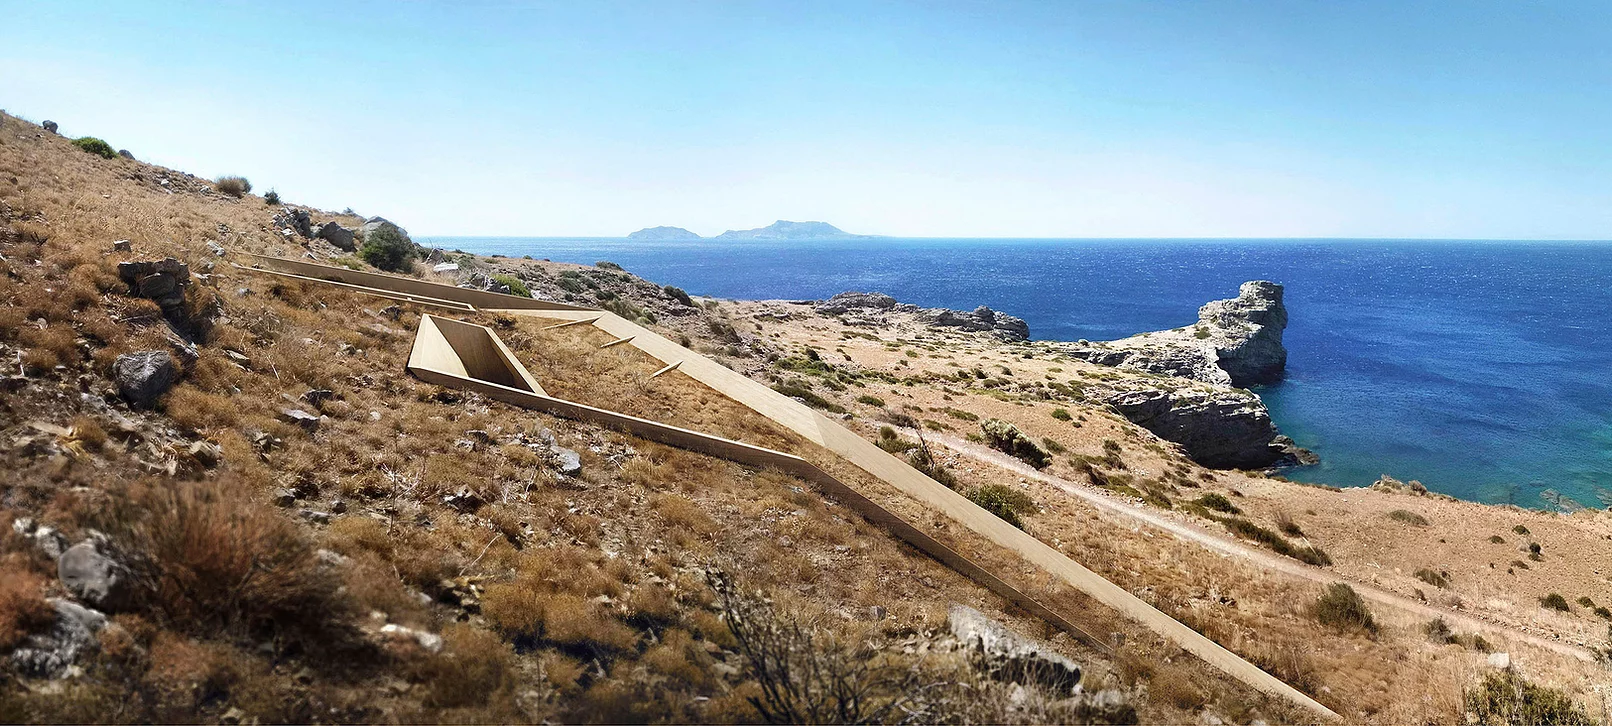 Casa Katana - a Crooked Line Engraved in the Cretan Landscape